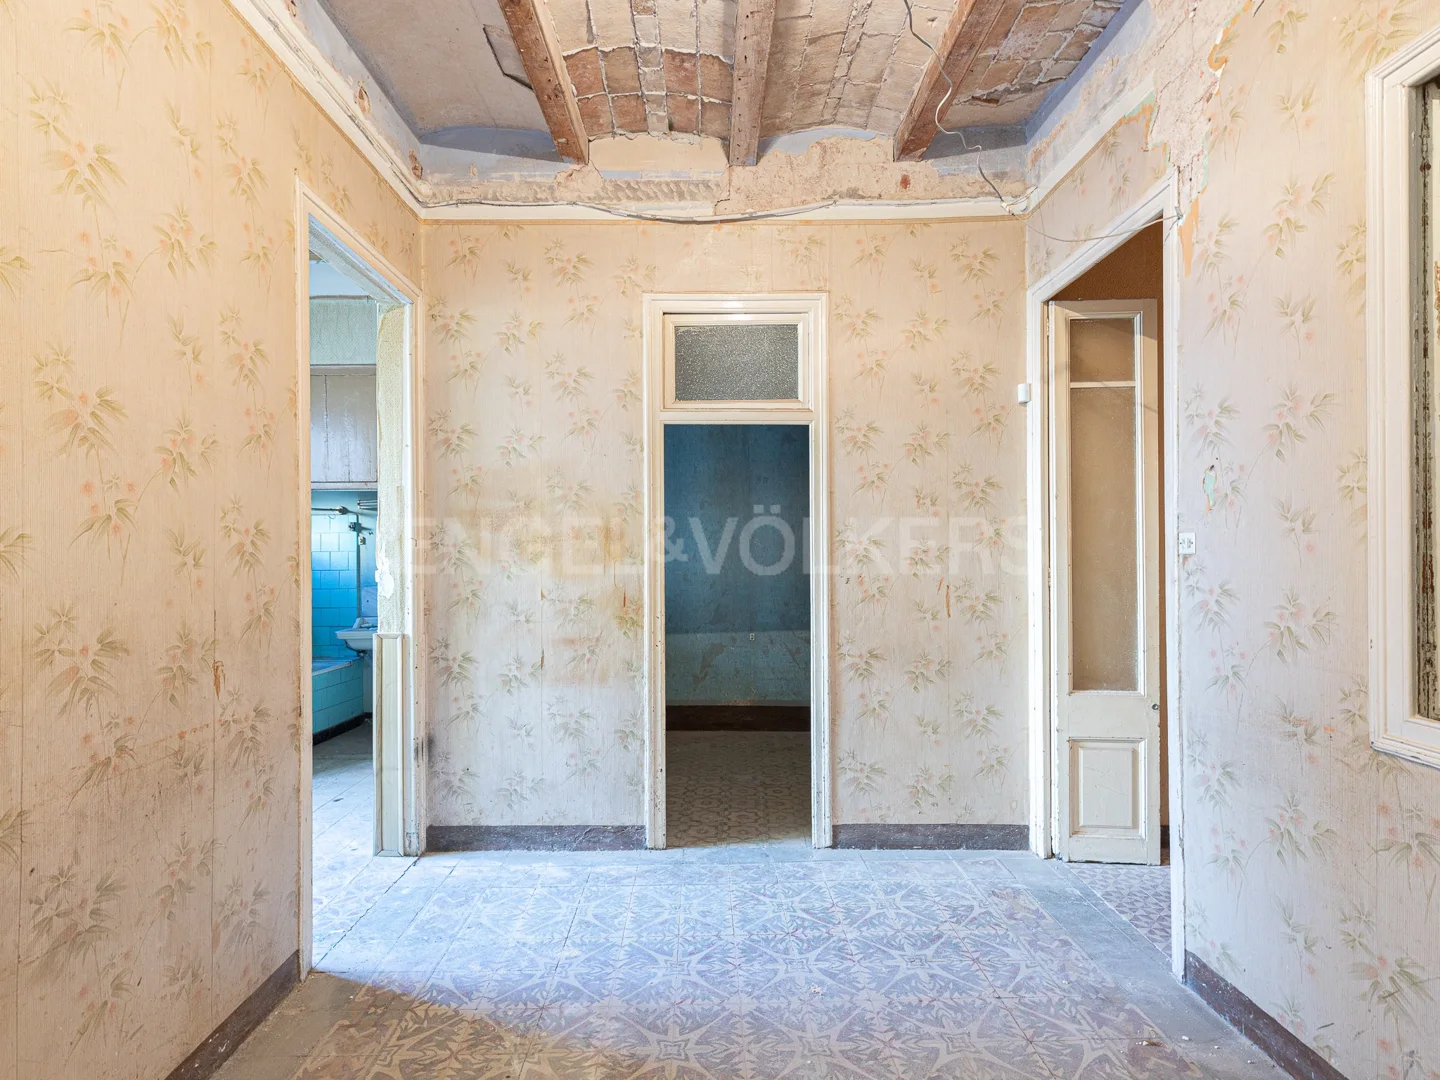 300m2 house in need of total renovation in Vila de Gràcia